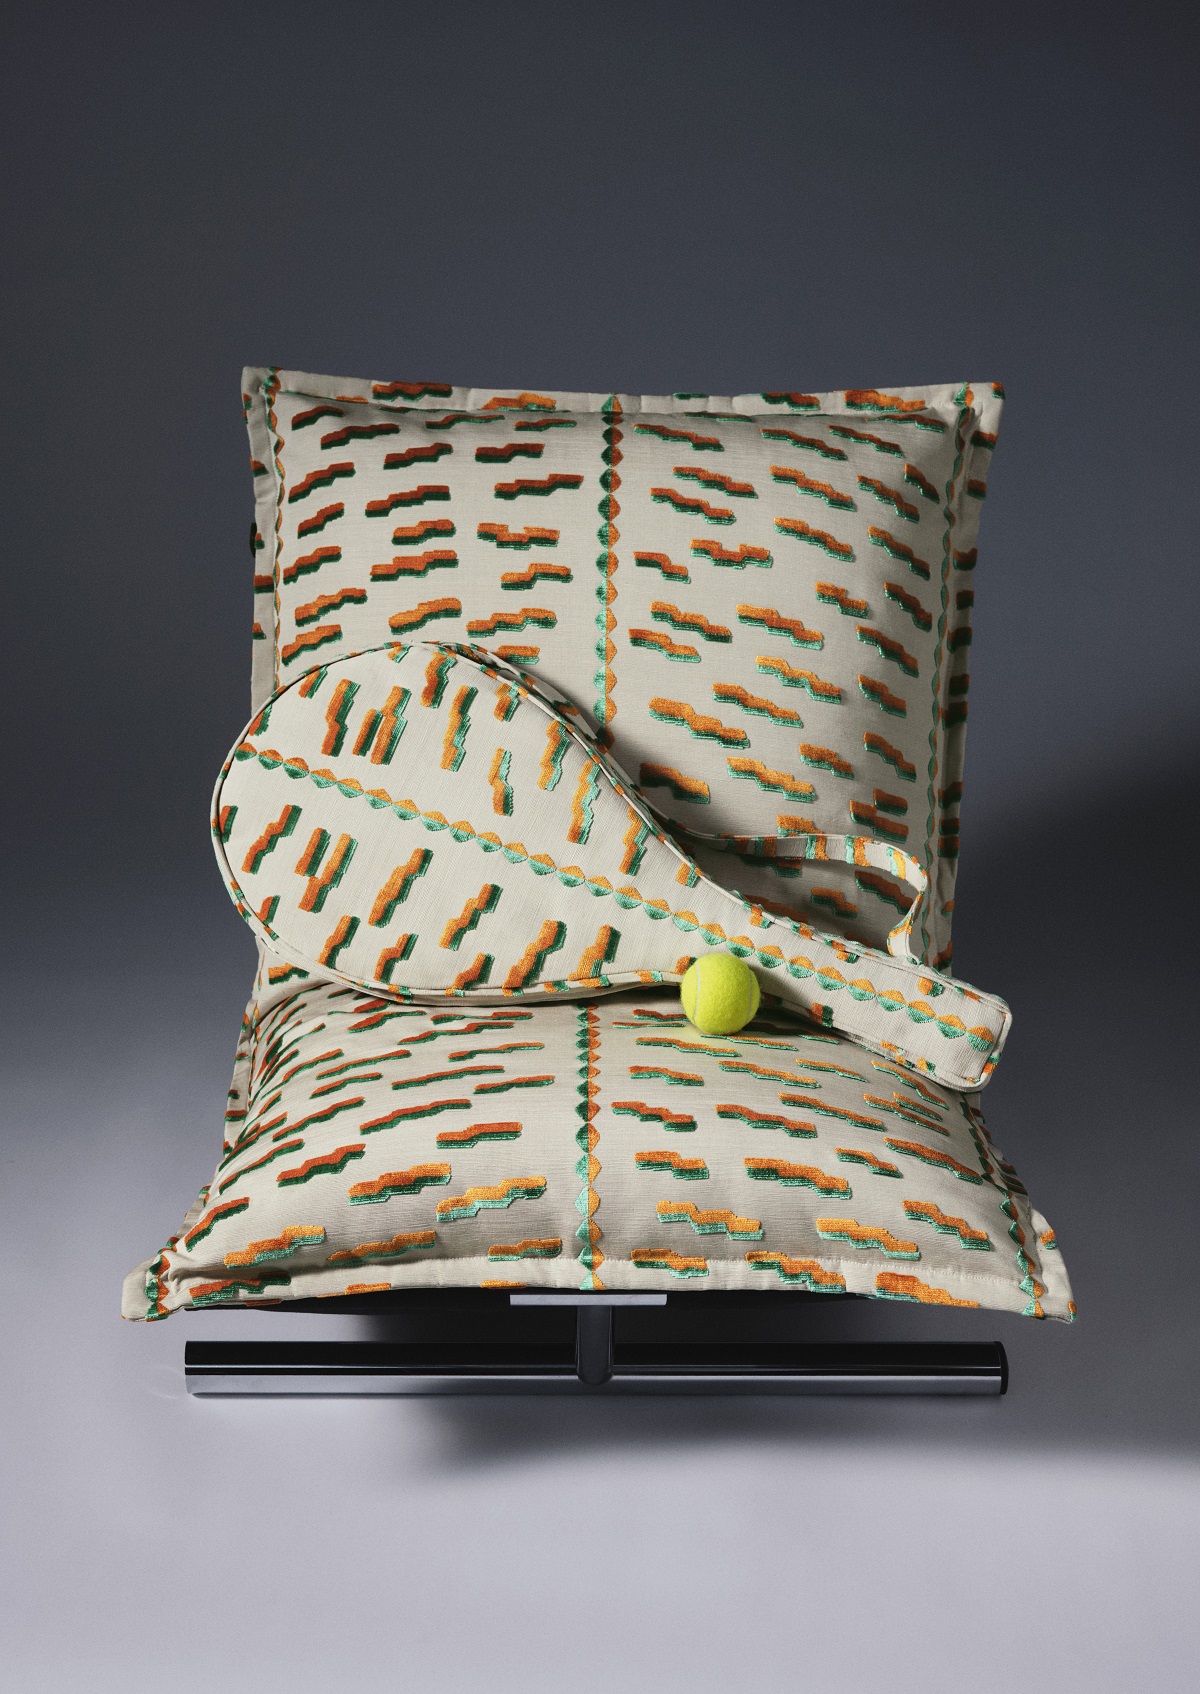 Dedar fabric covering cushions and racket